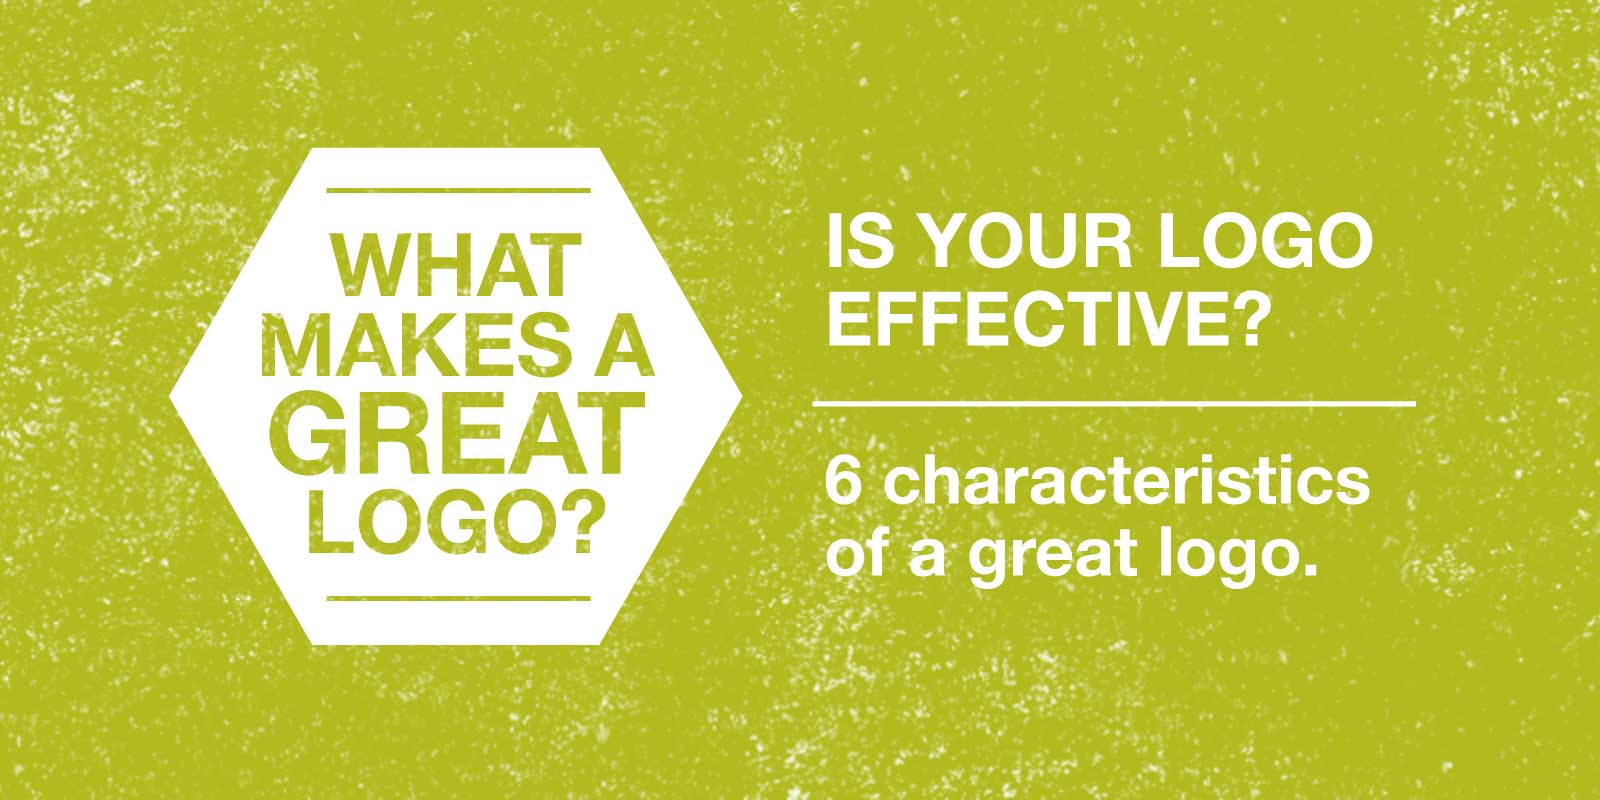 Grreat Logo - What Makes a Great Logo?